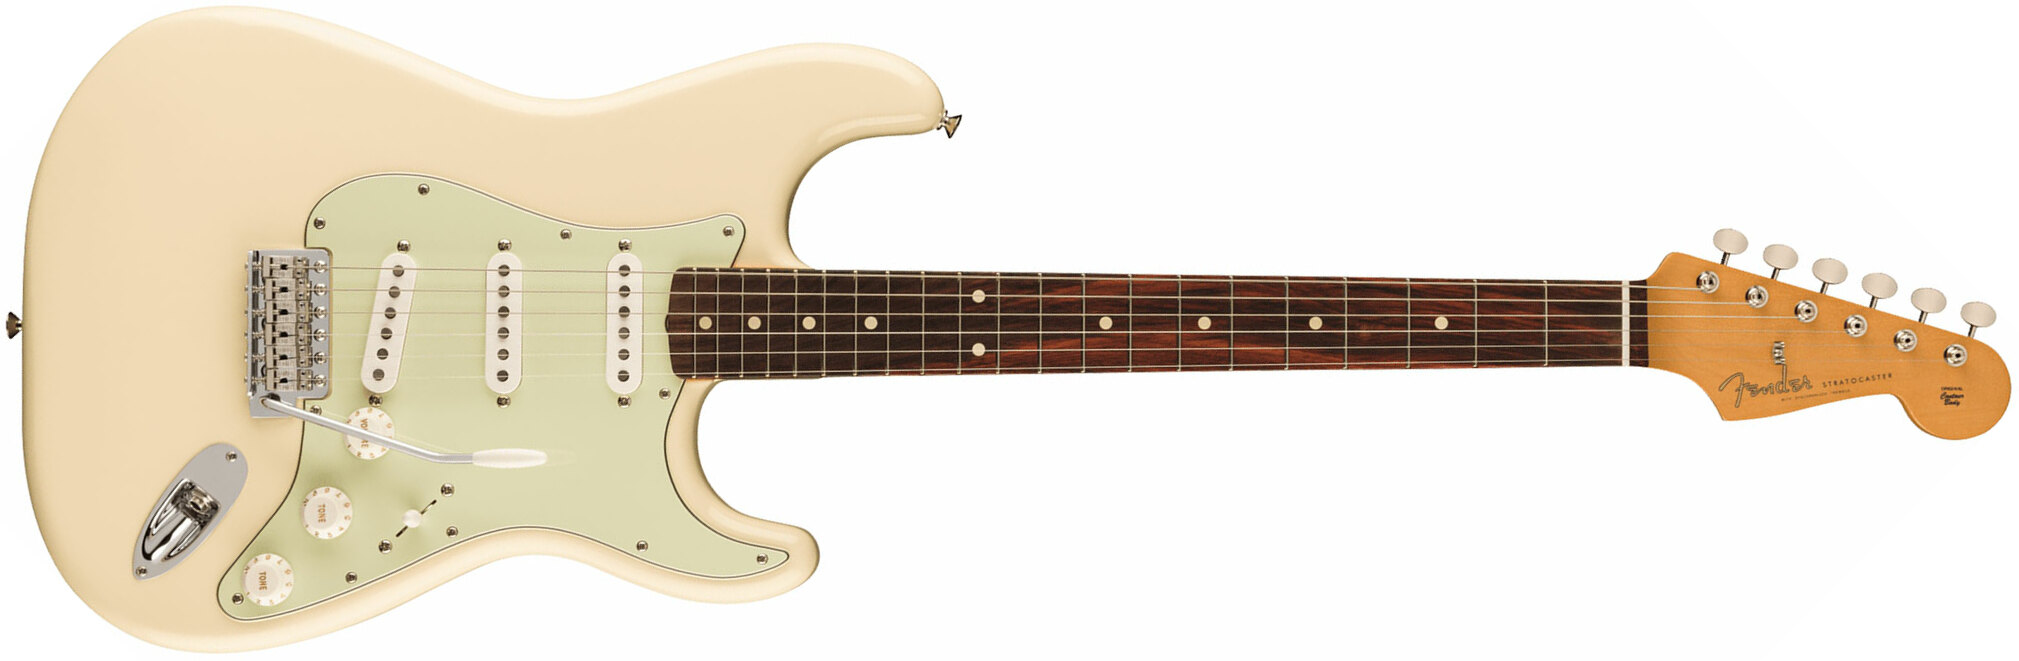 Fender Strat 60s Vintera 2 Mex 3s Trem Rw - Olympic White - Str shape electric guitar - Main picture